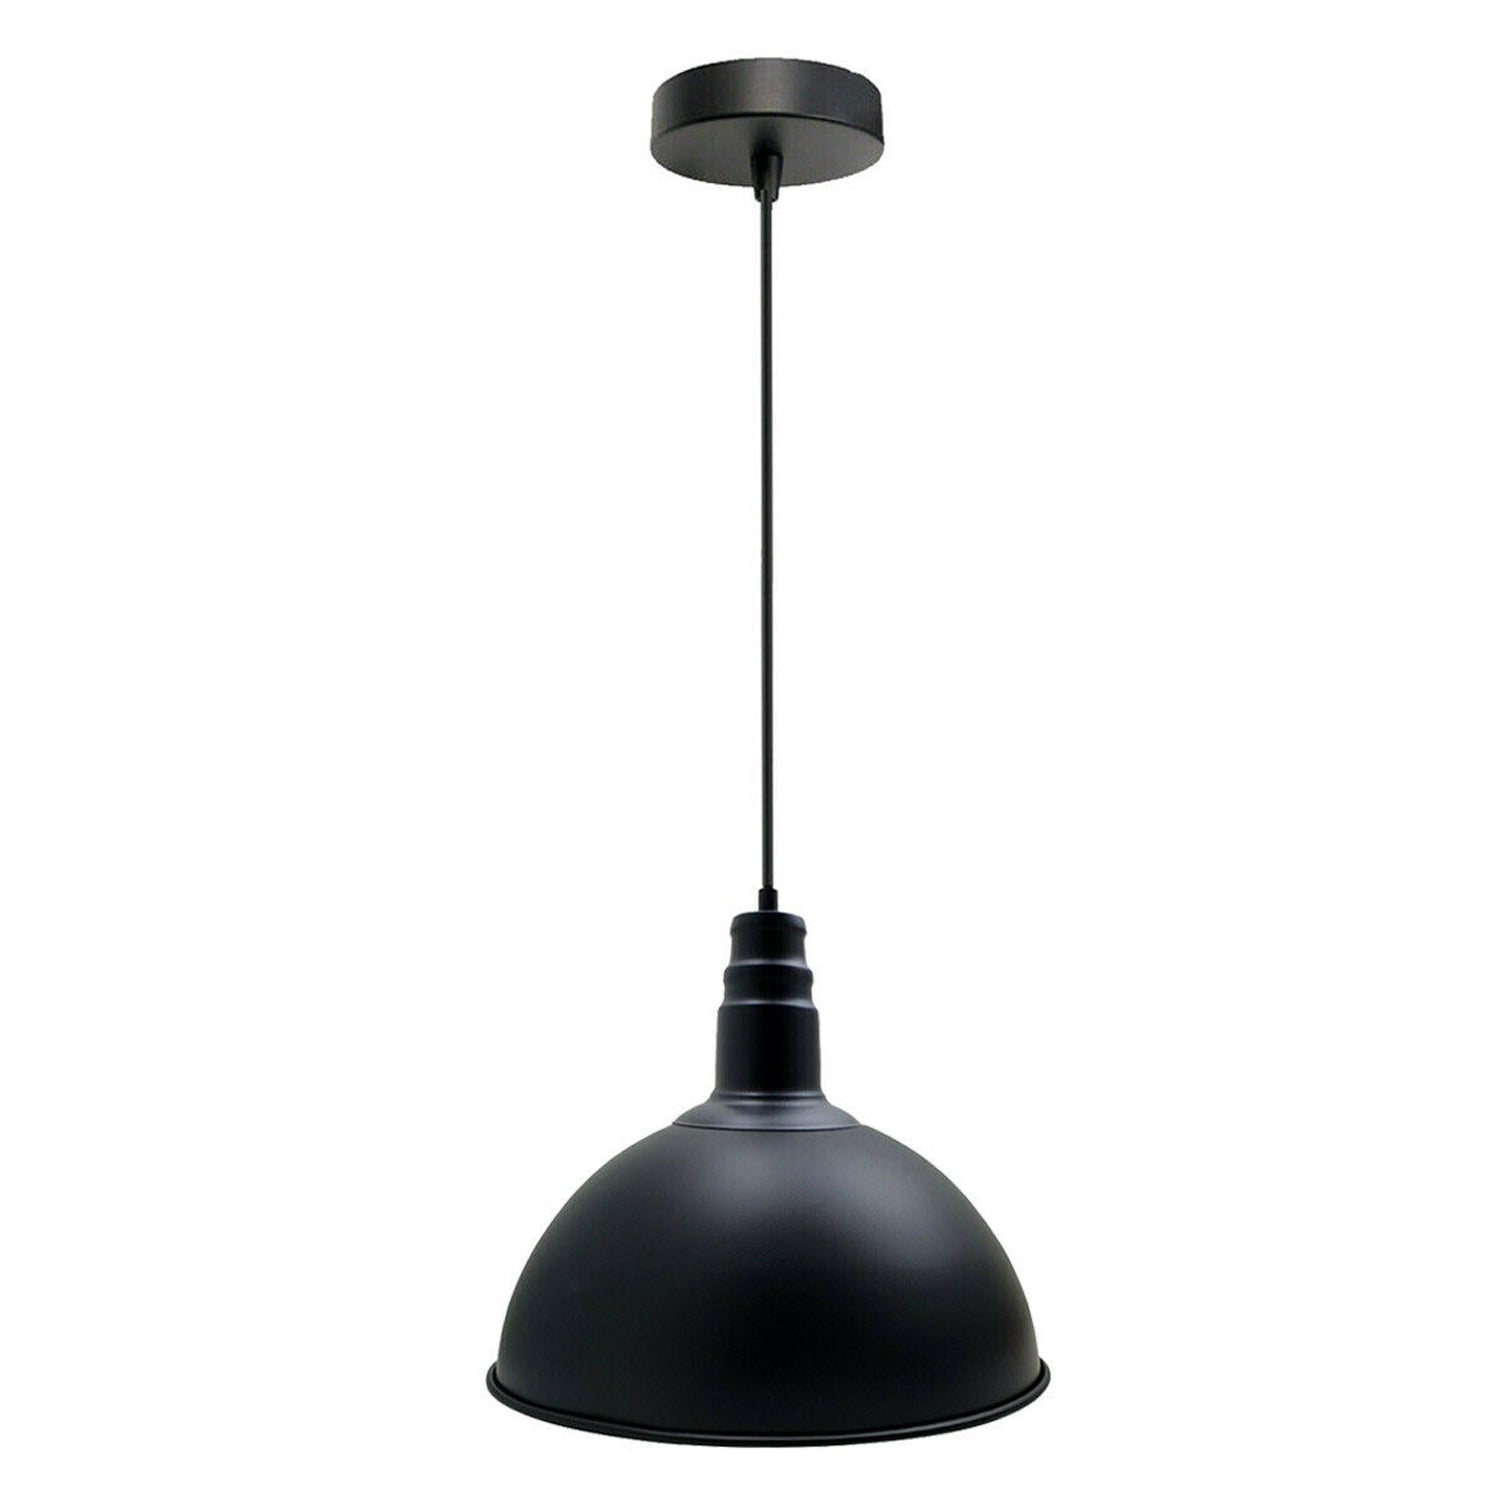 Black Industrial Vintage Style Ceiling Pendant Light Fittings Metal Lampshades~1976 - LEDSone UK Ltd